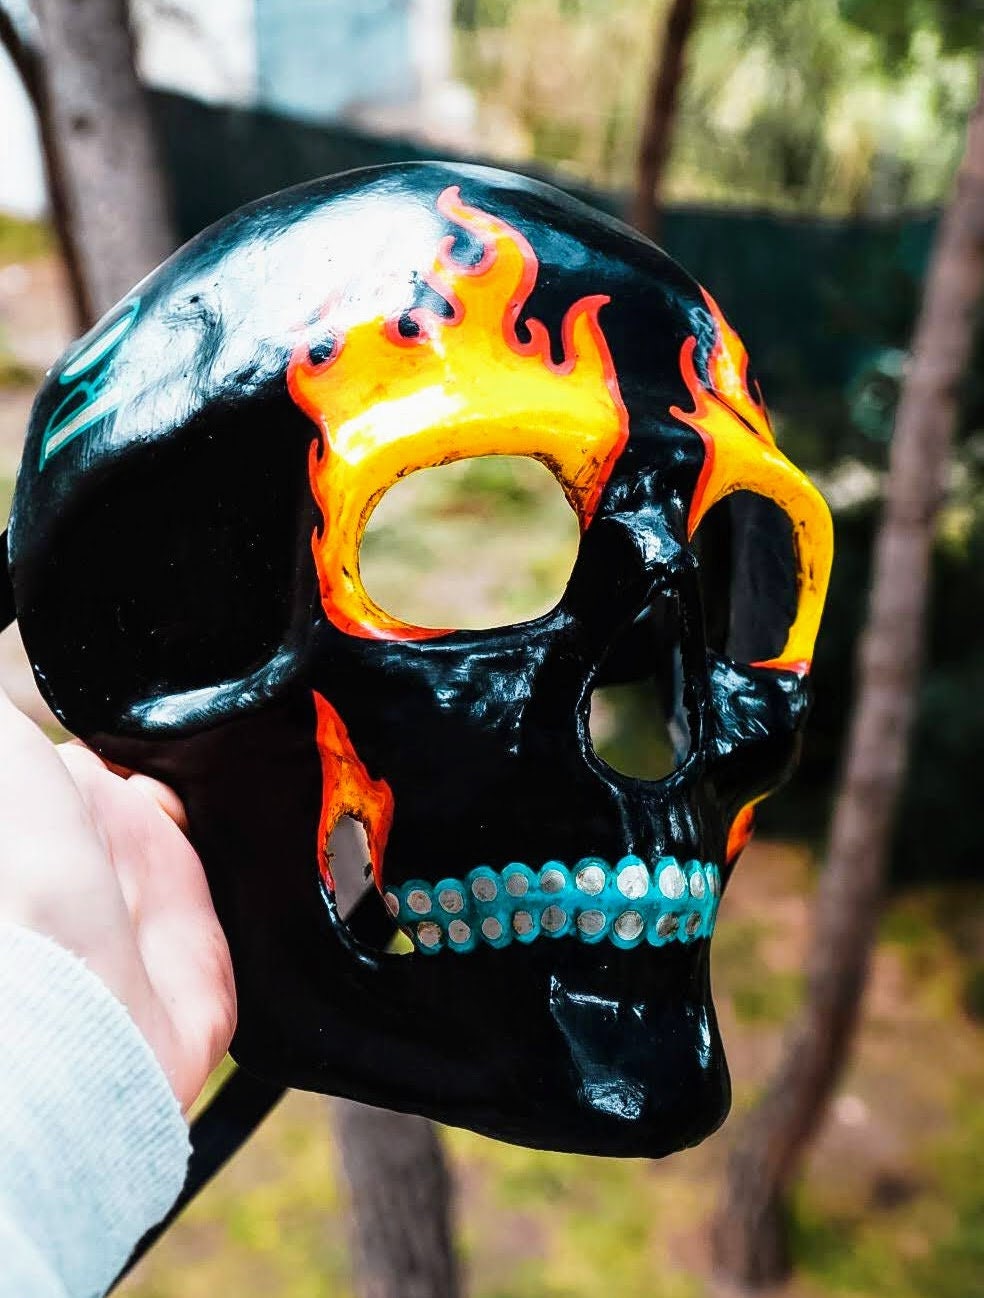 Mask ready - Skull mask On Fire venetian style